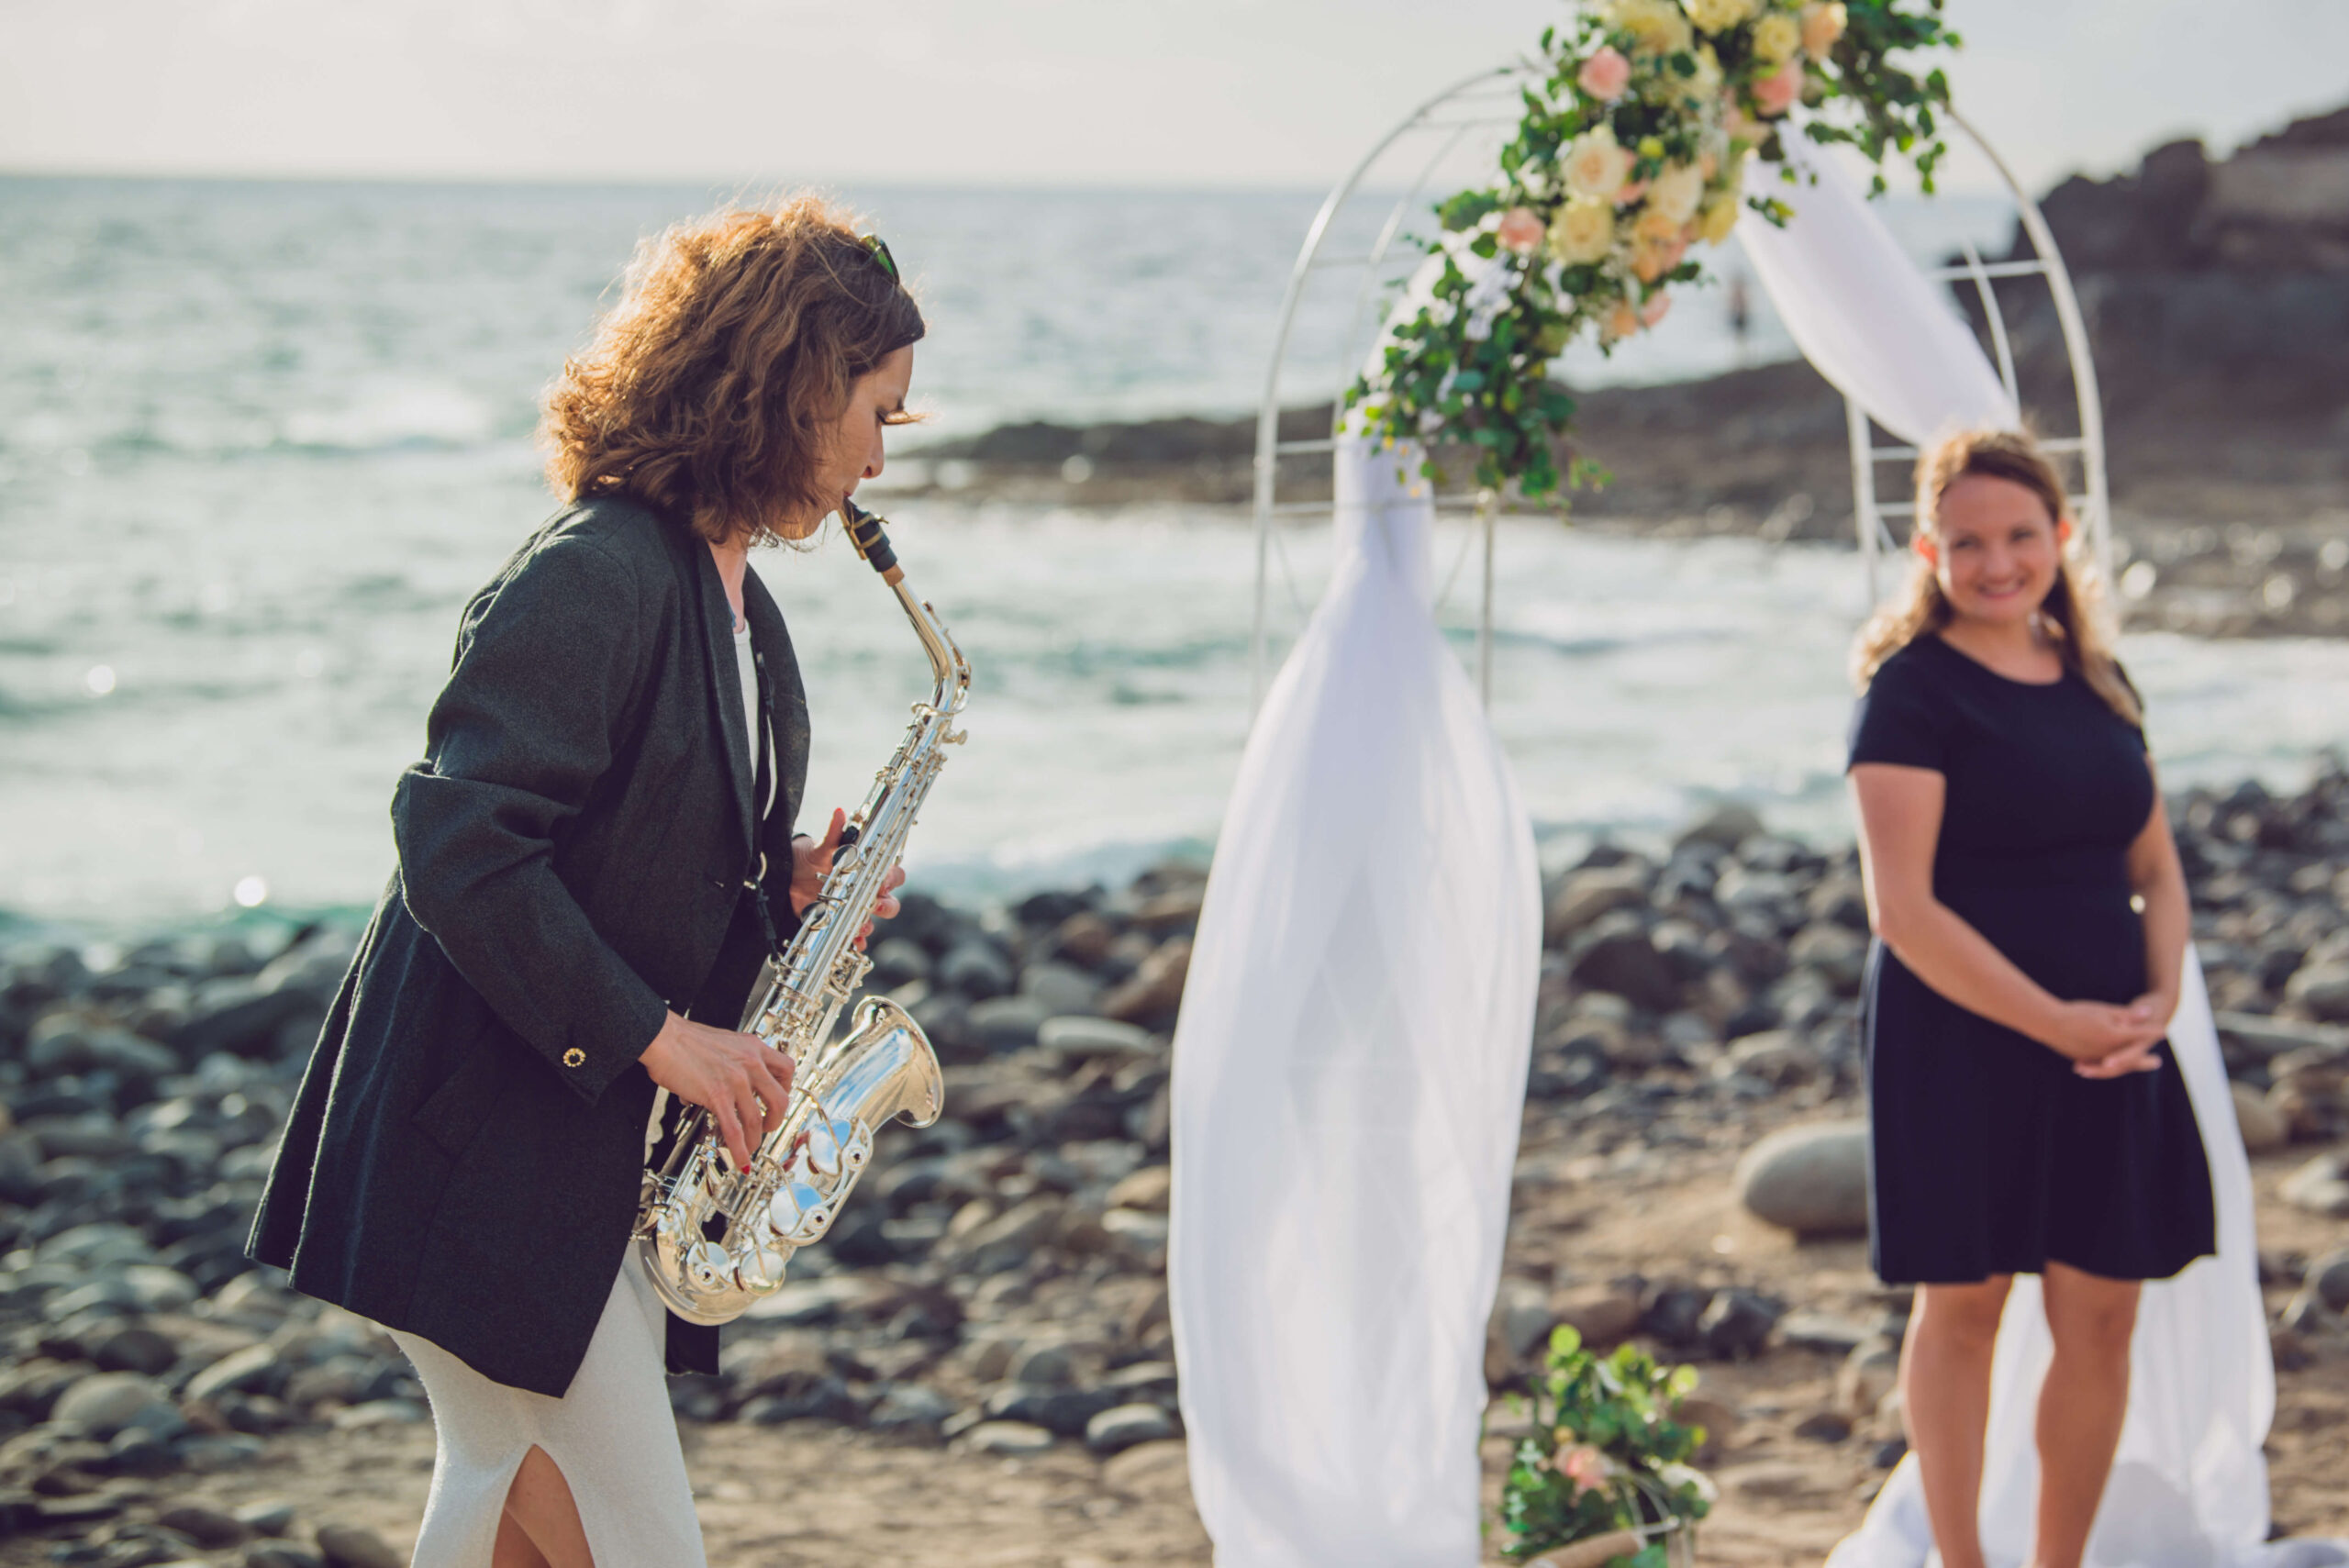 Civil wedding in Tenerife